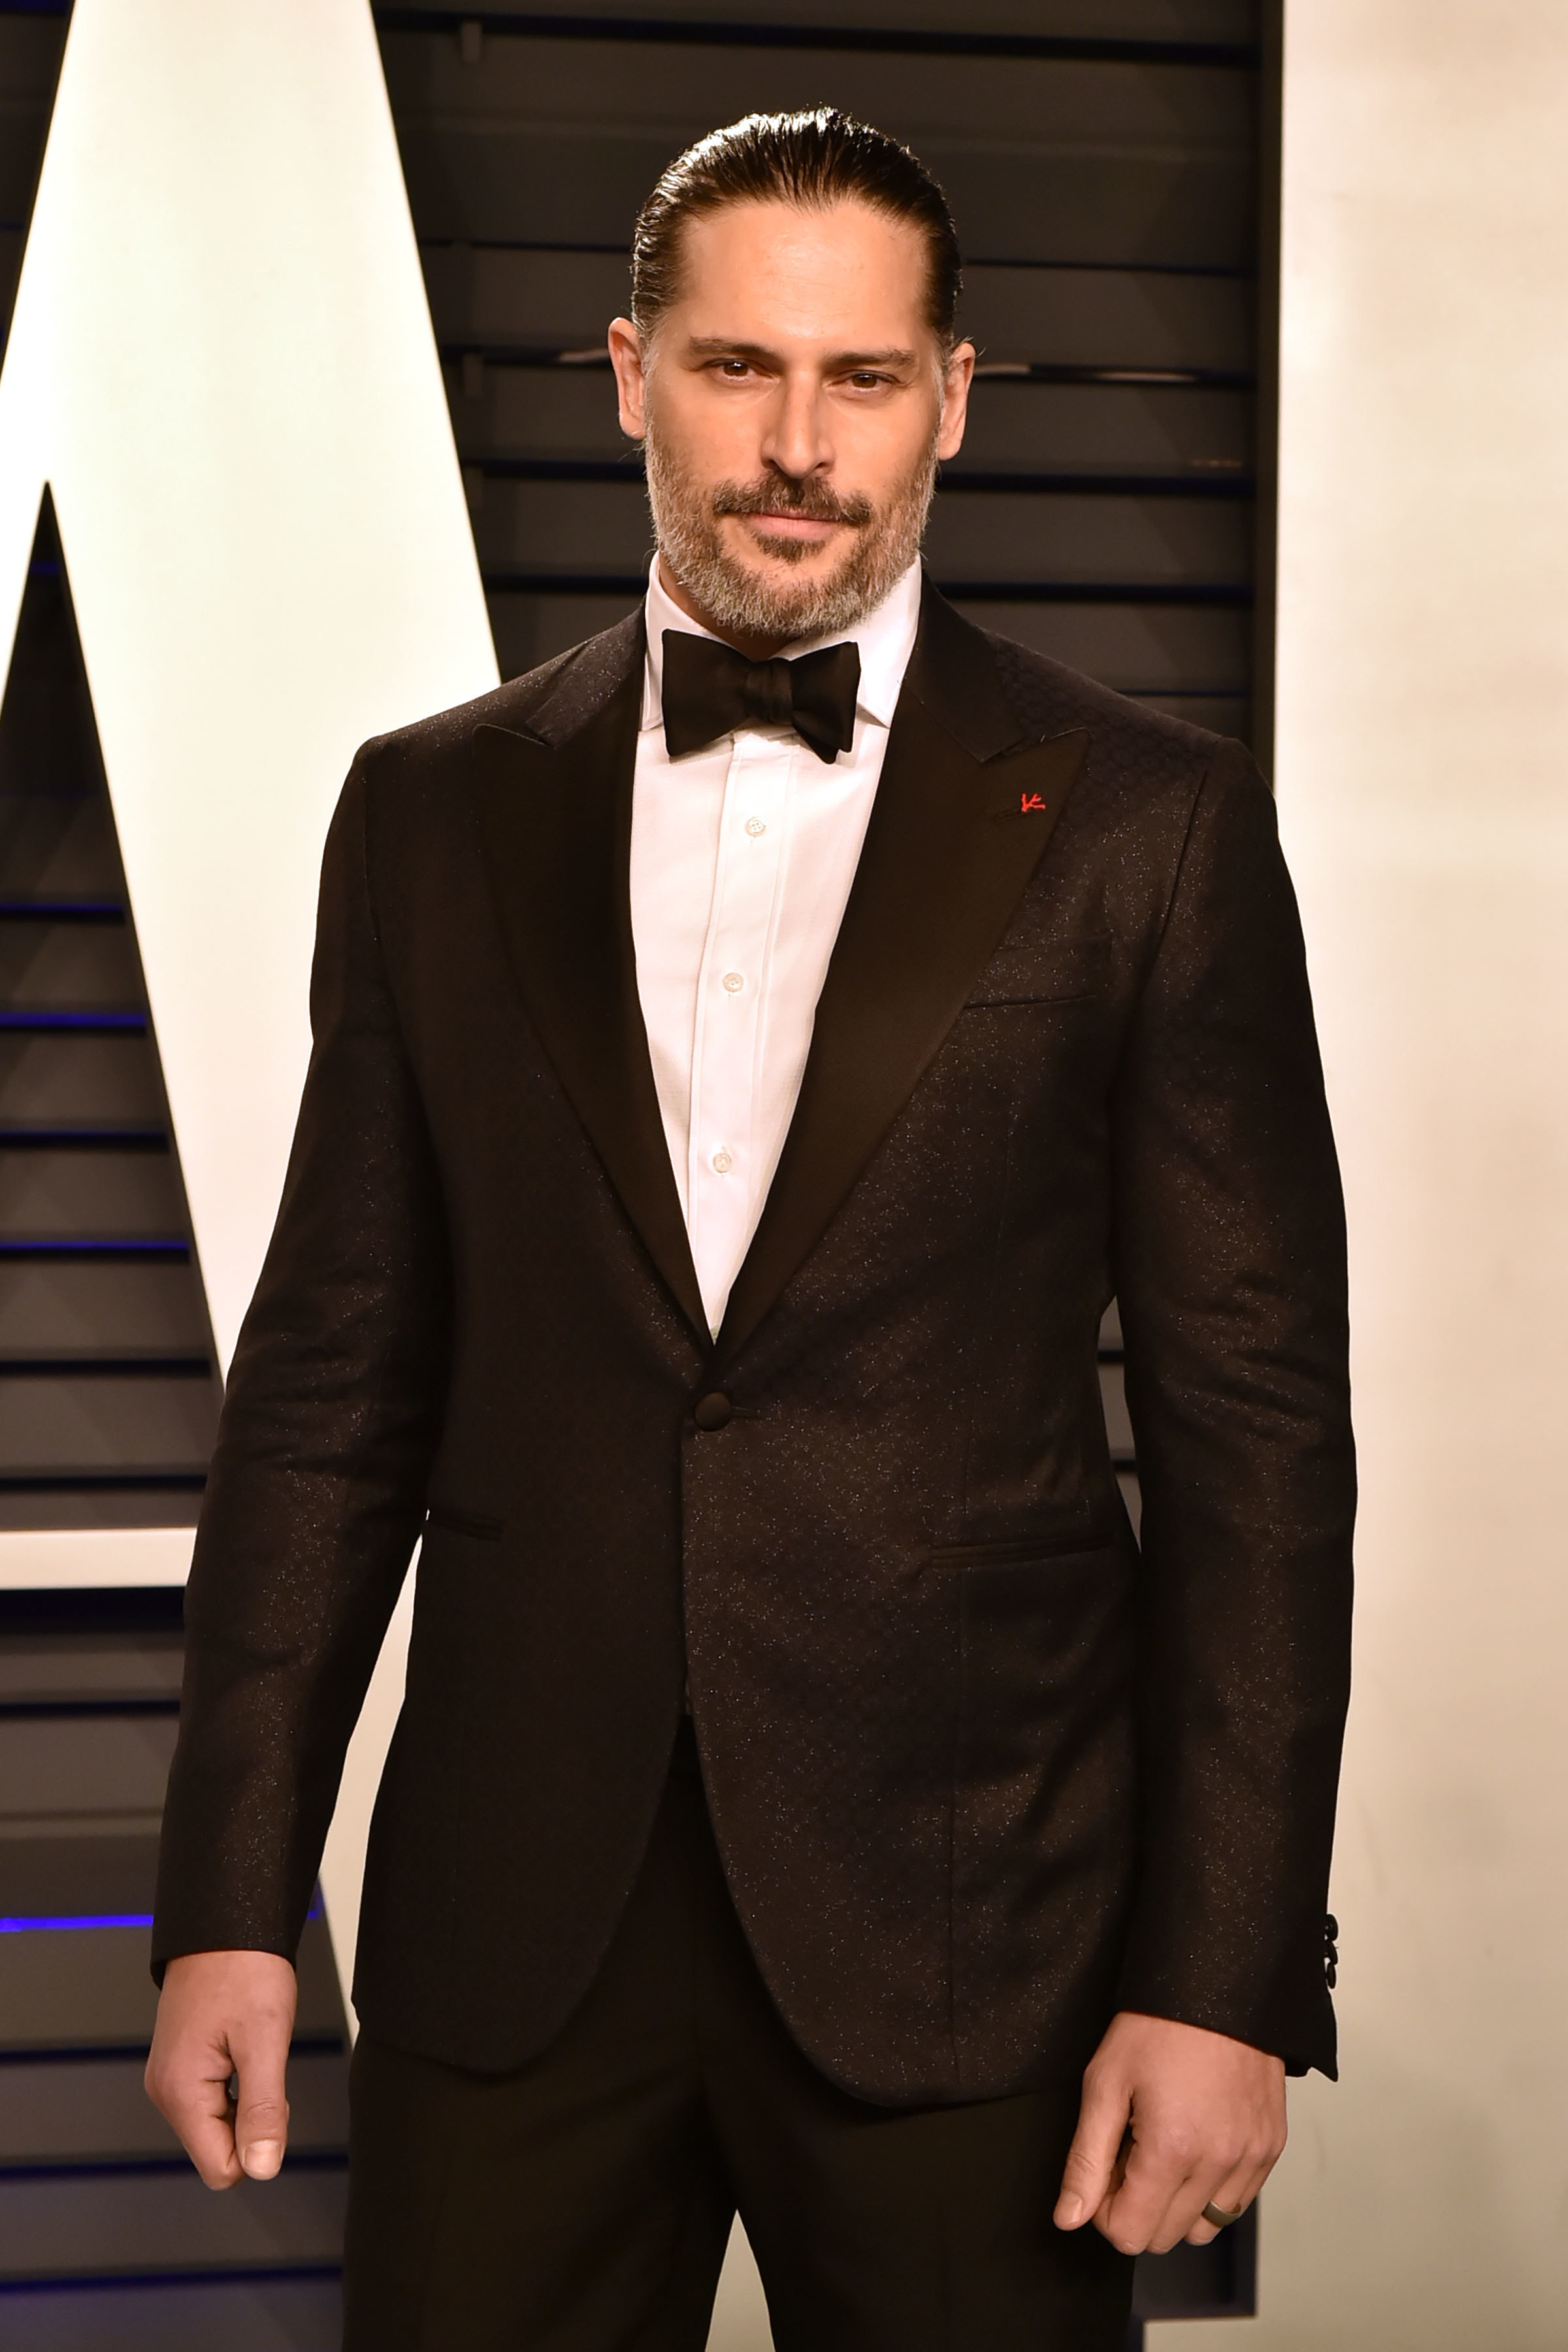 Manganiello at the 2019 Vanity Fair Oscar party